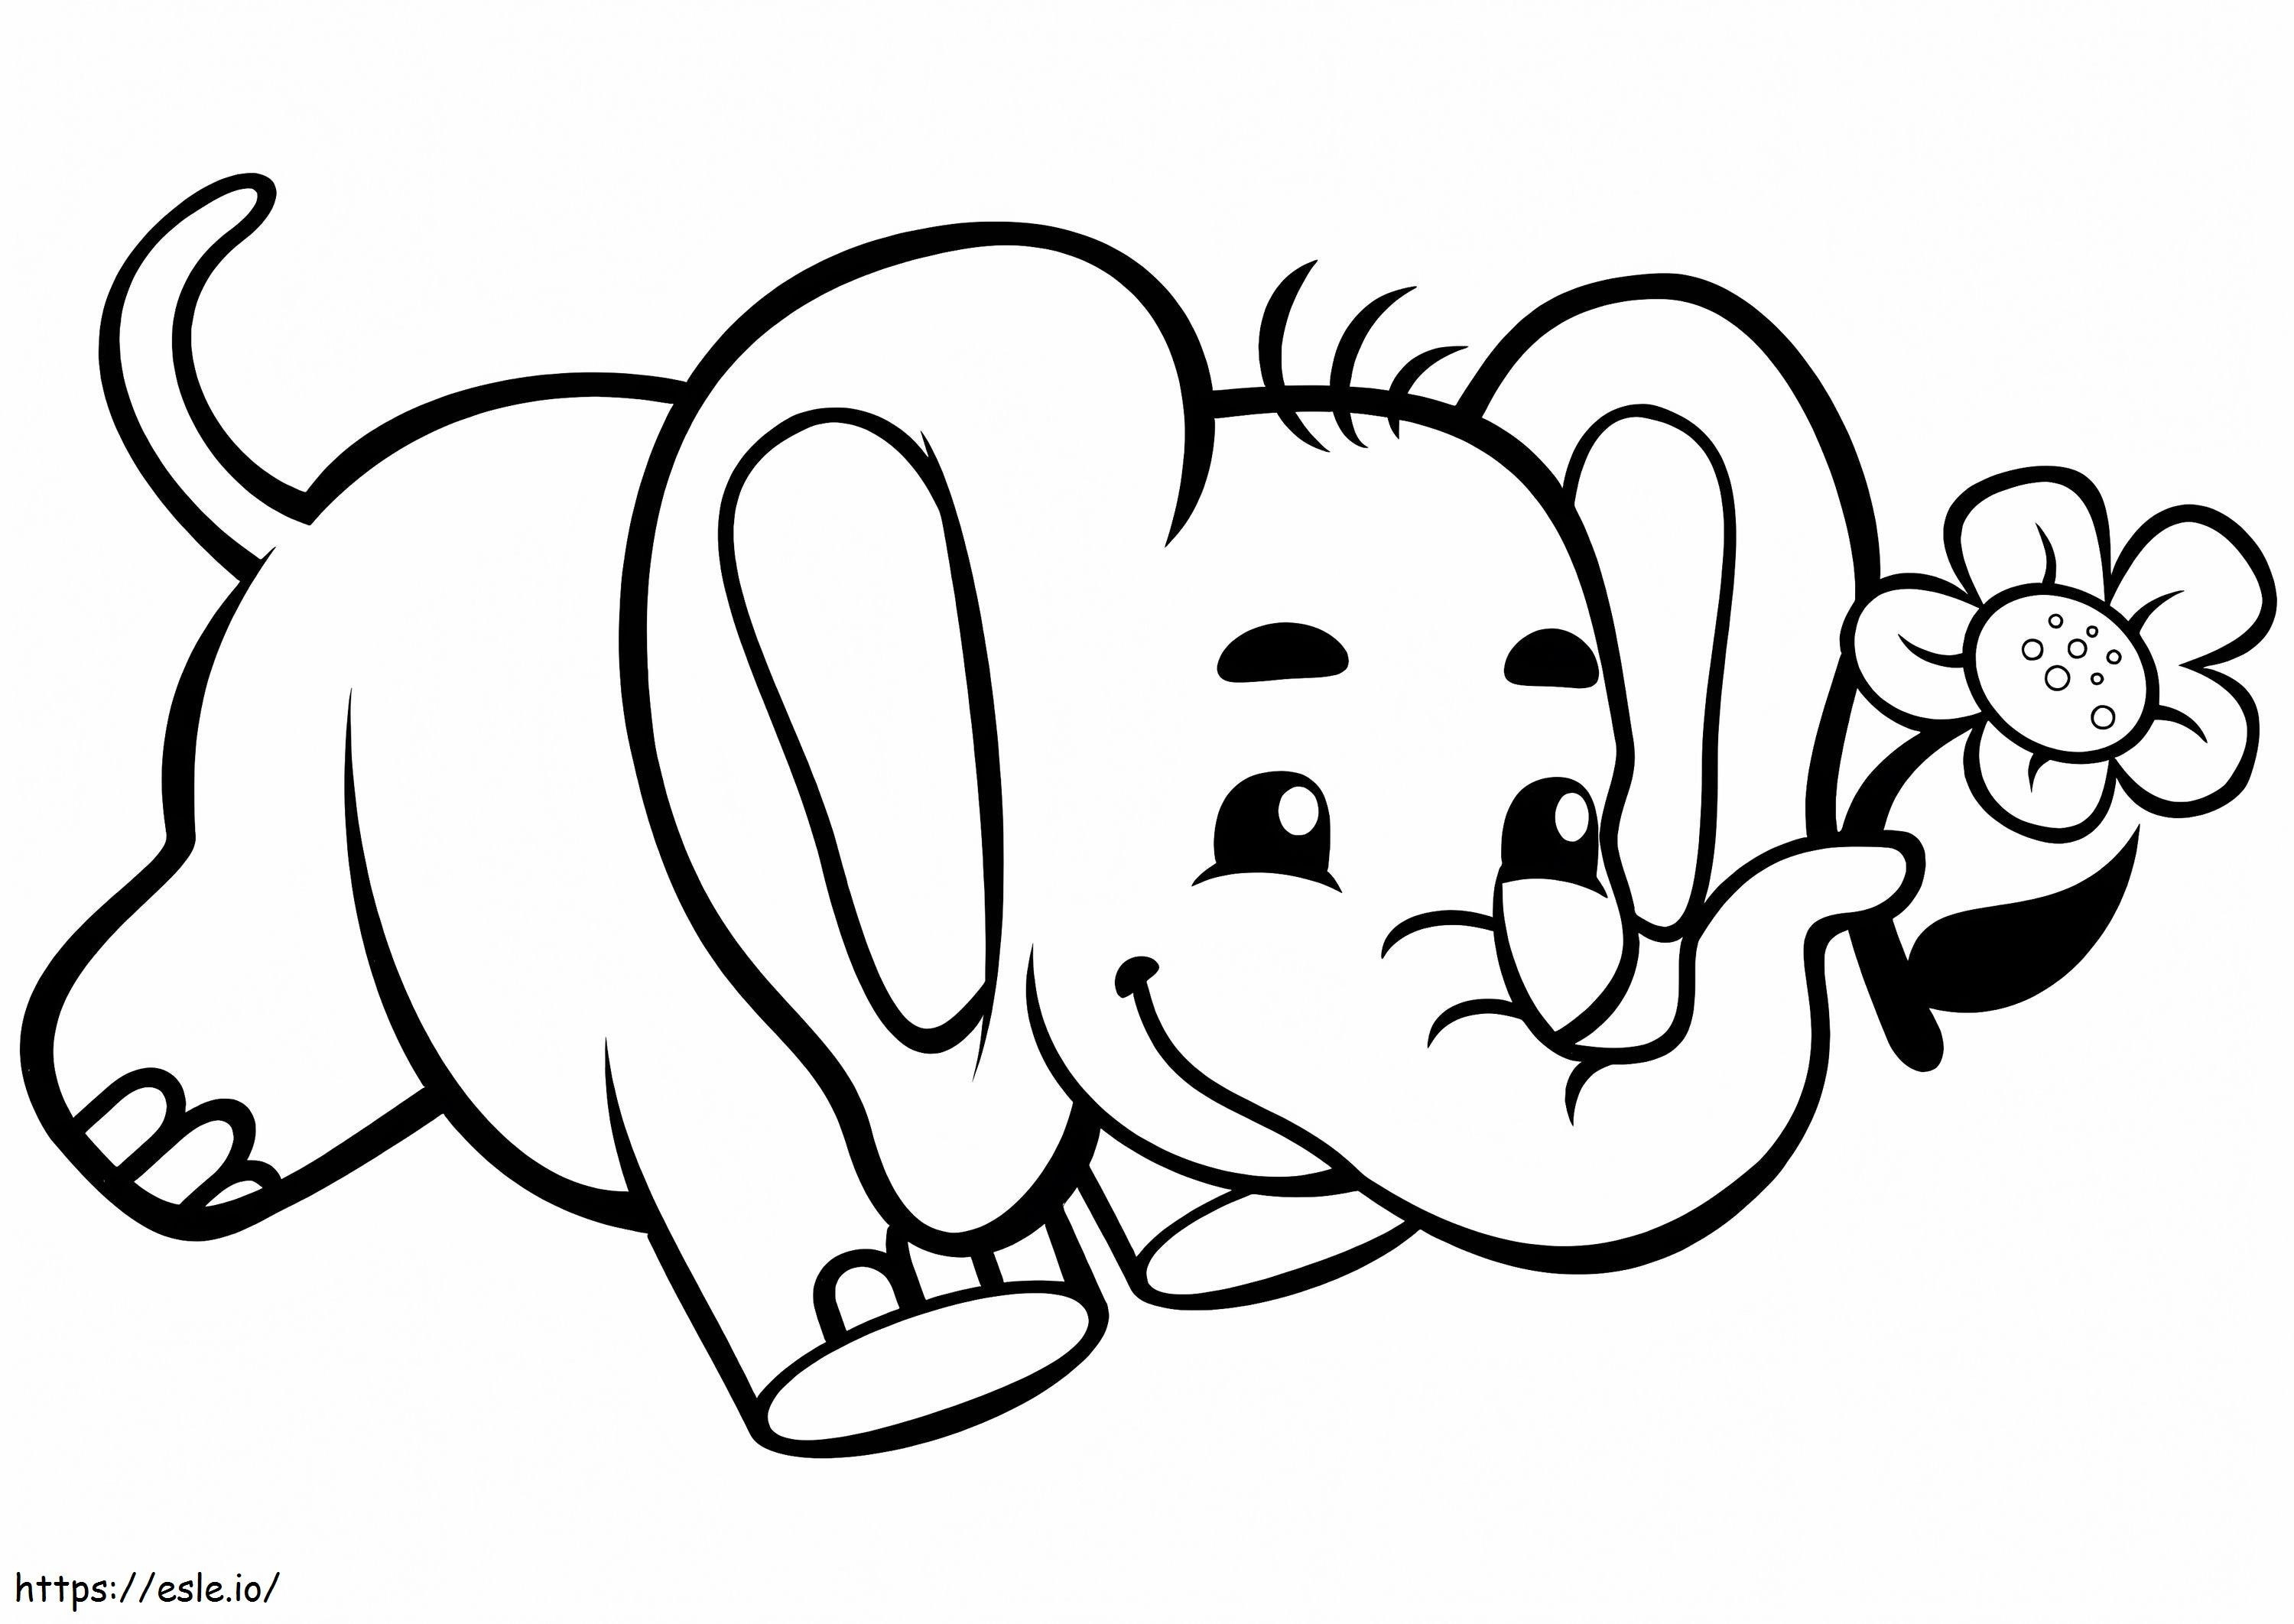 Elephant Mignon 2 coloring page